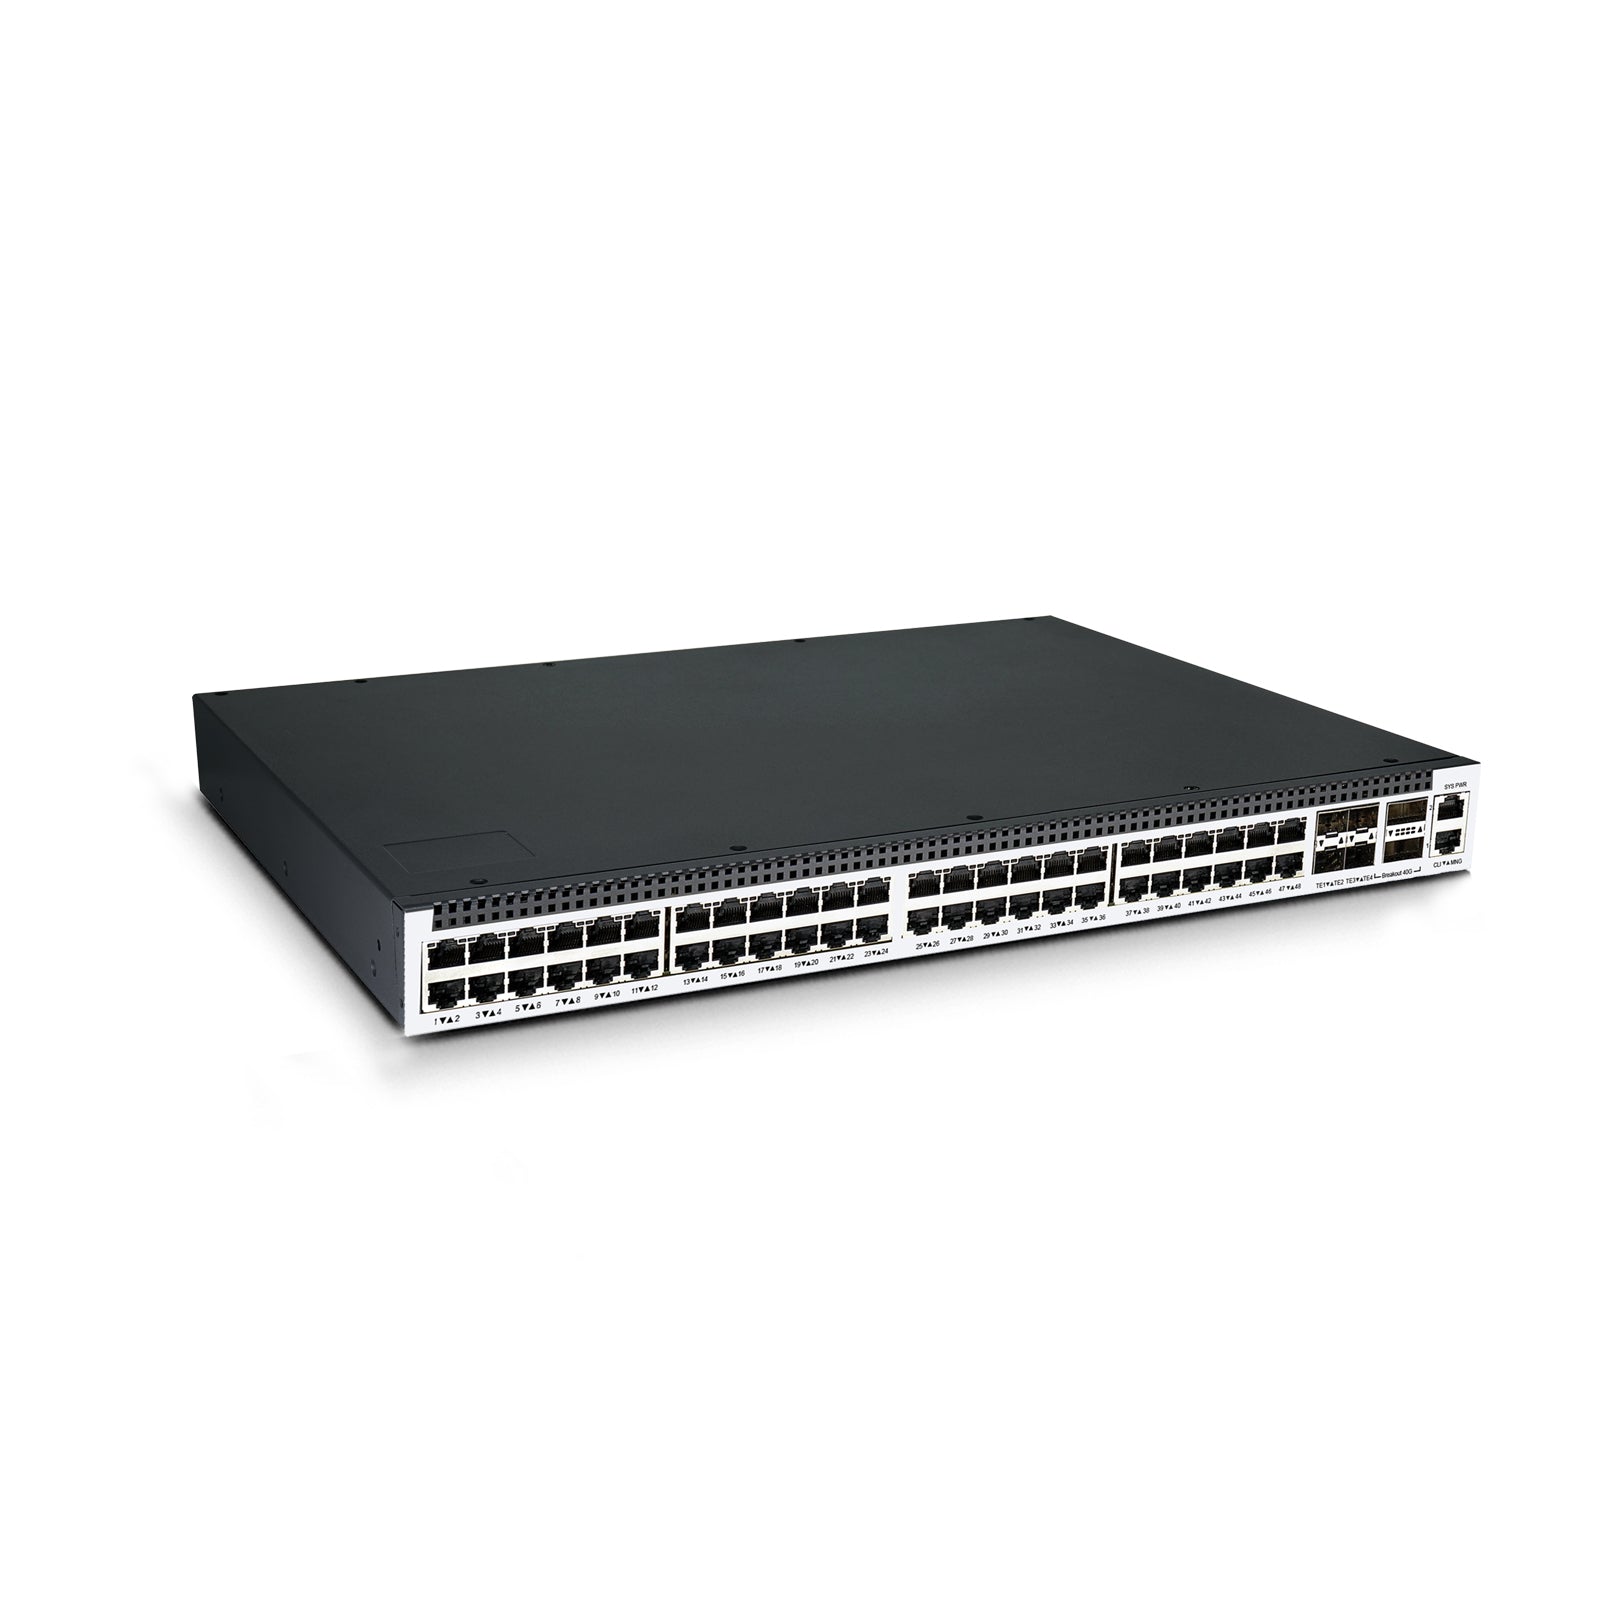 S7300-48TE4X2Q 48-Port Multi Gigabit L3 BGP Switch with 48x 100M/1000M/2.5GBASE-T RJ45, with 4x1G/10G SFP+ and 2x 40G QSFP+ Uplink Ports